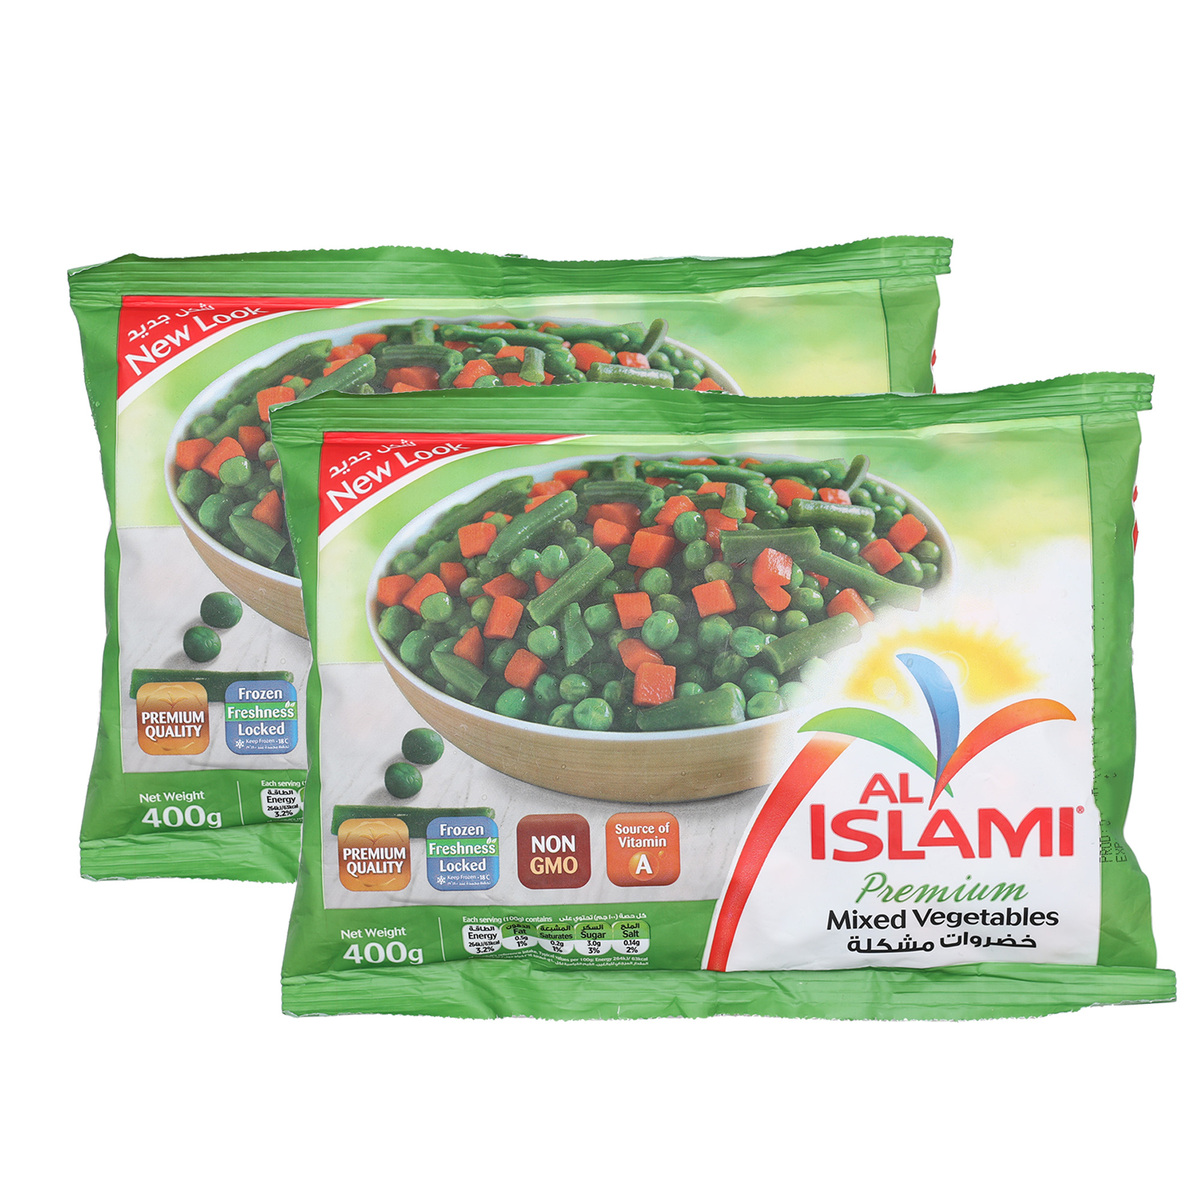 Al Islami Mixed Vegetables Value Pack 2 x 400g